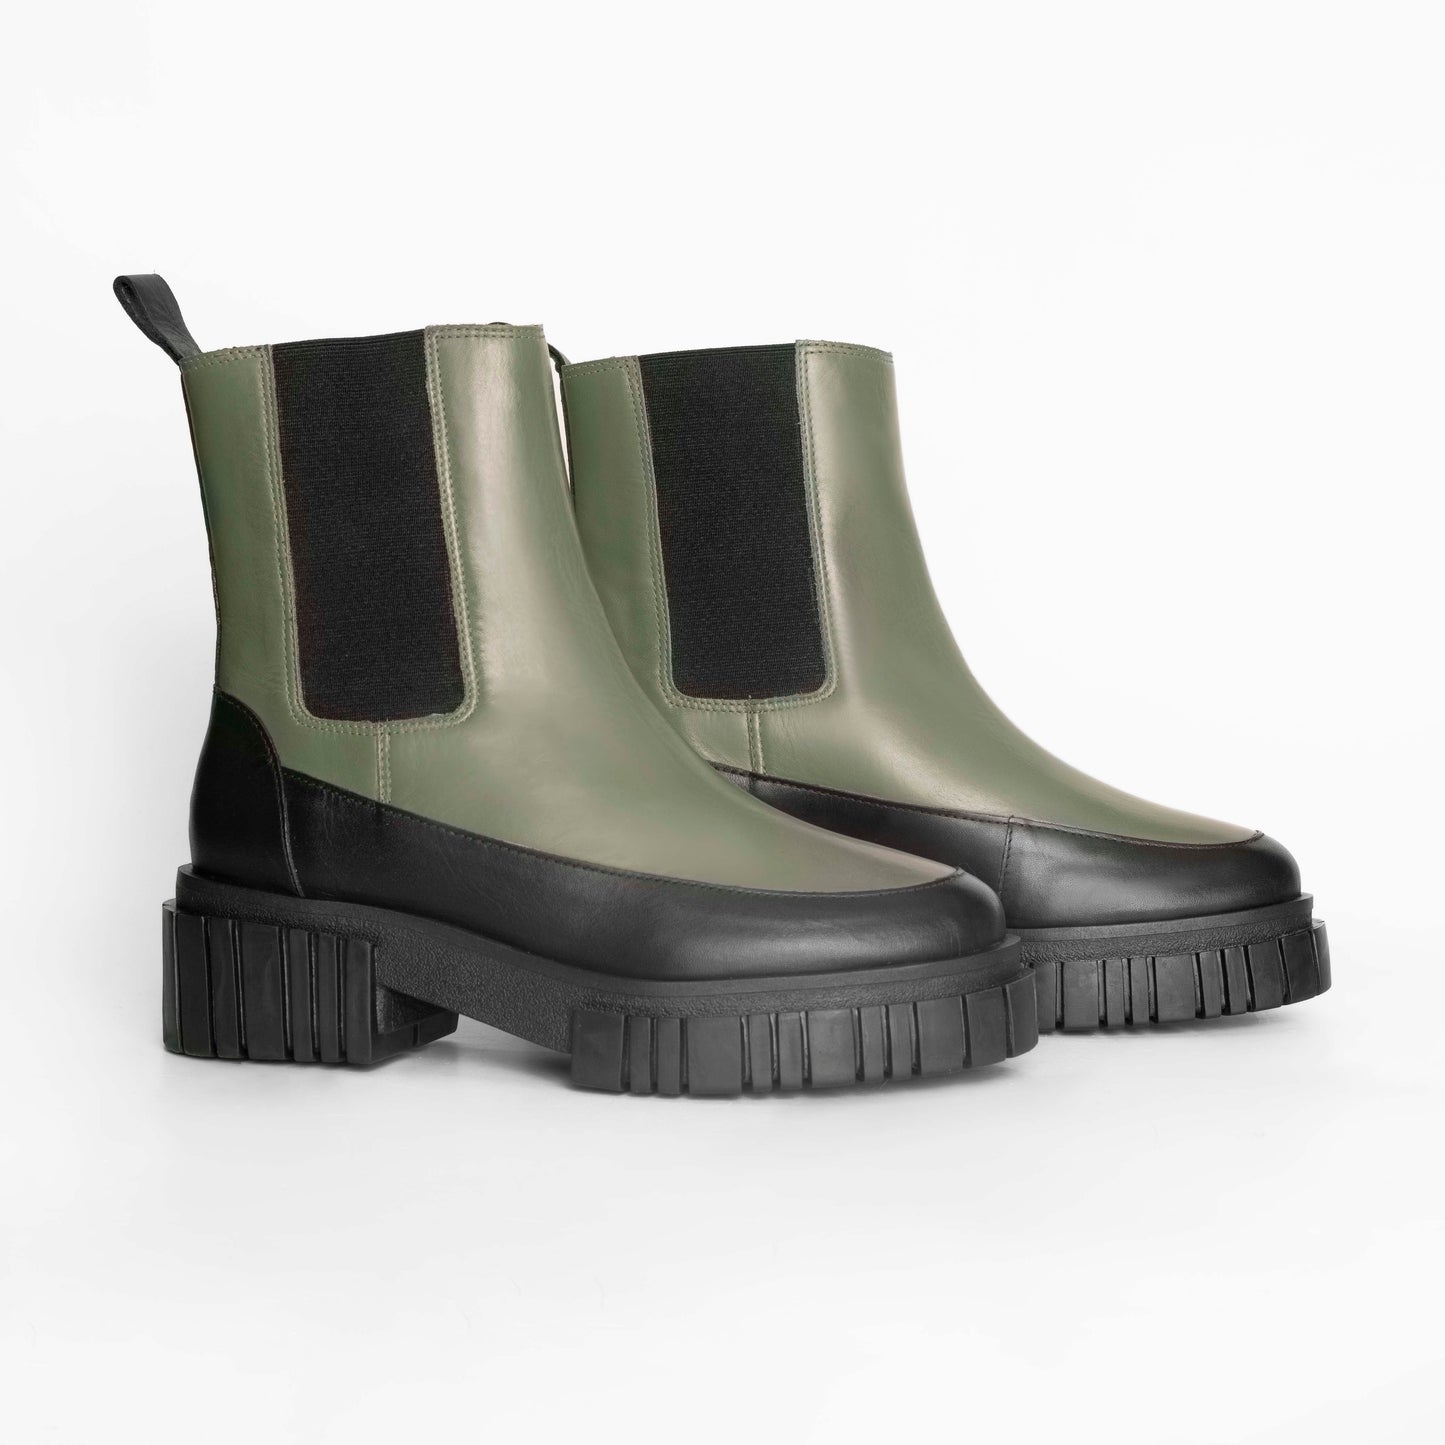 Vinci Shoes Celina Military Green Chelsea Boot